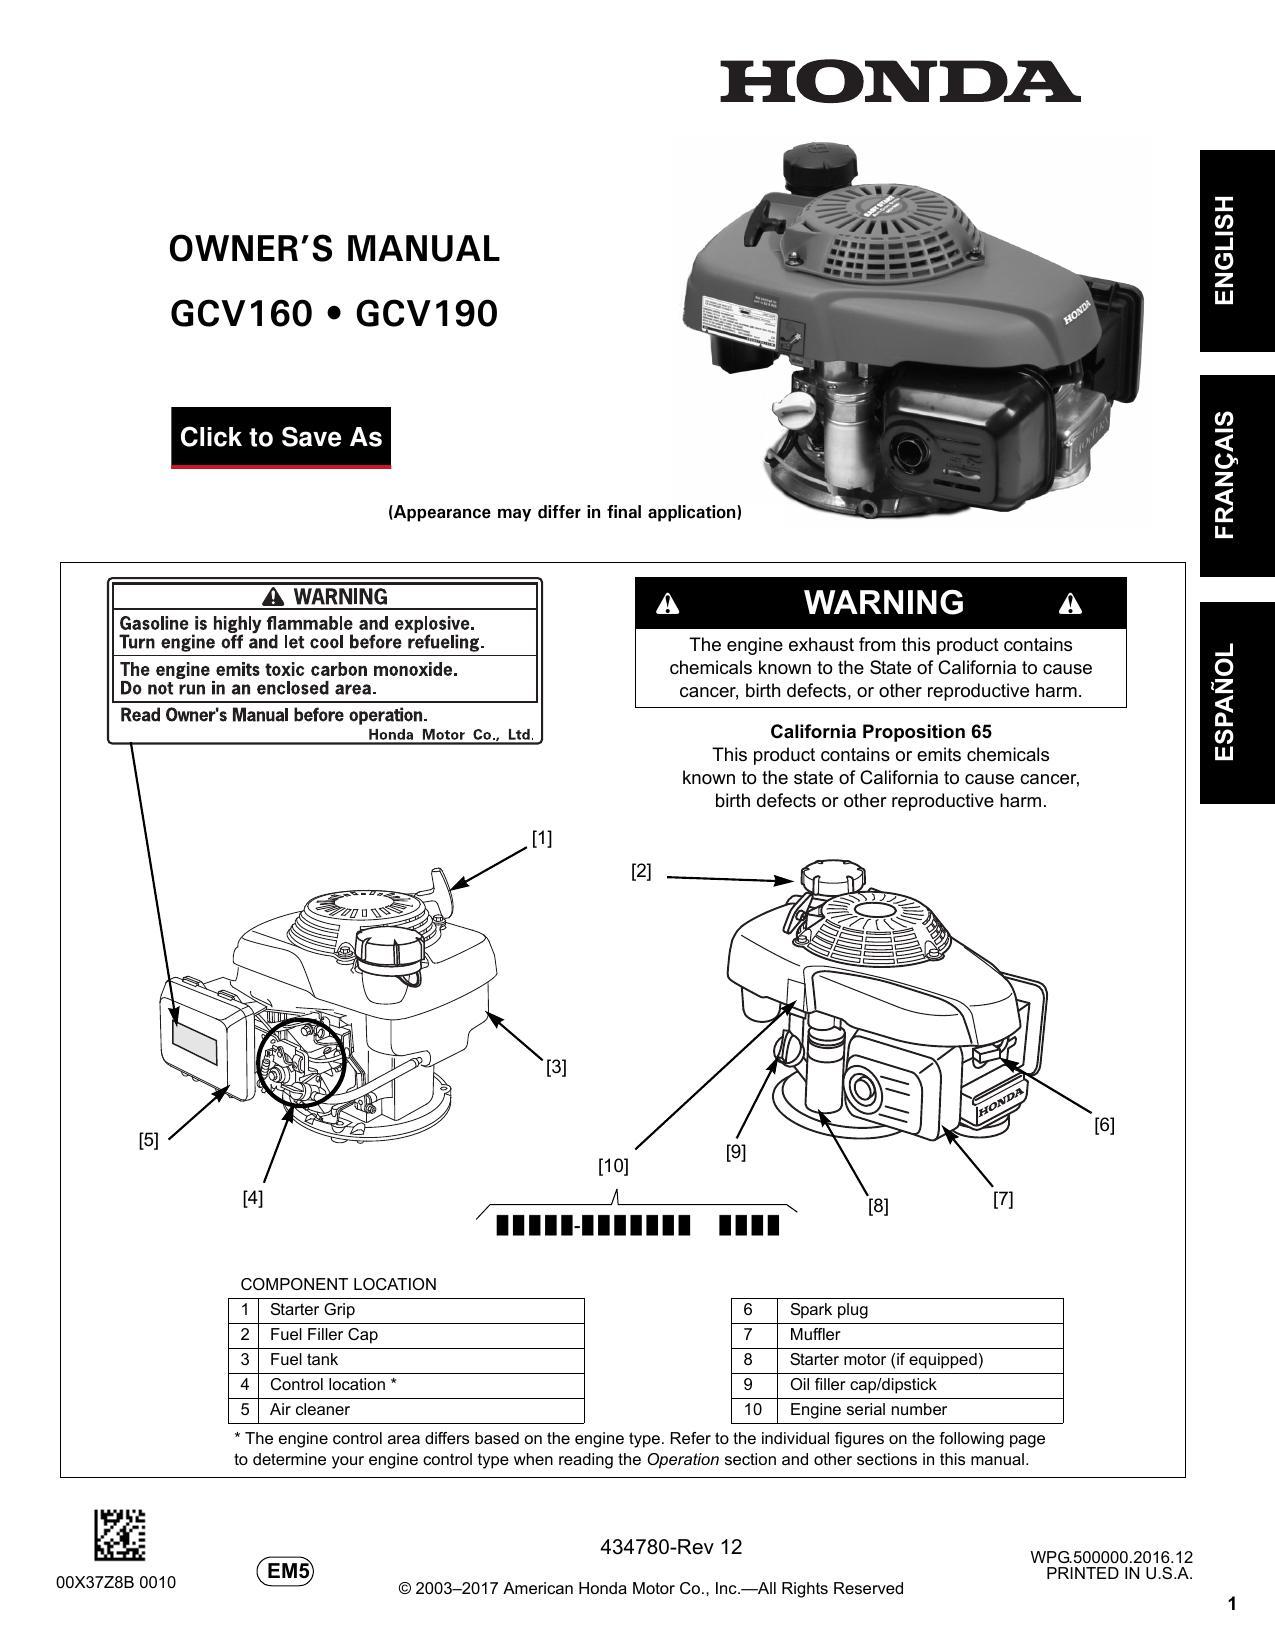 honda-gcv160-gcv190-owners-manual.pdf